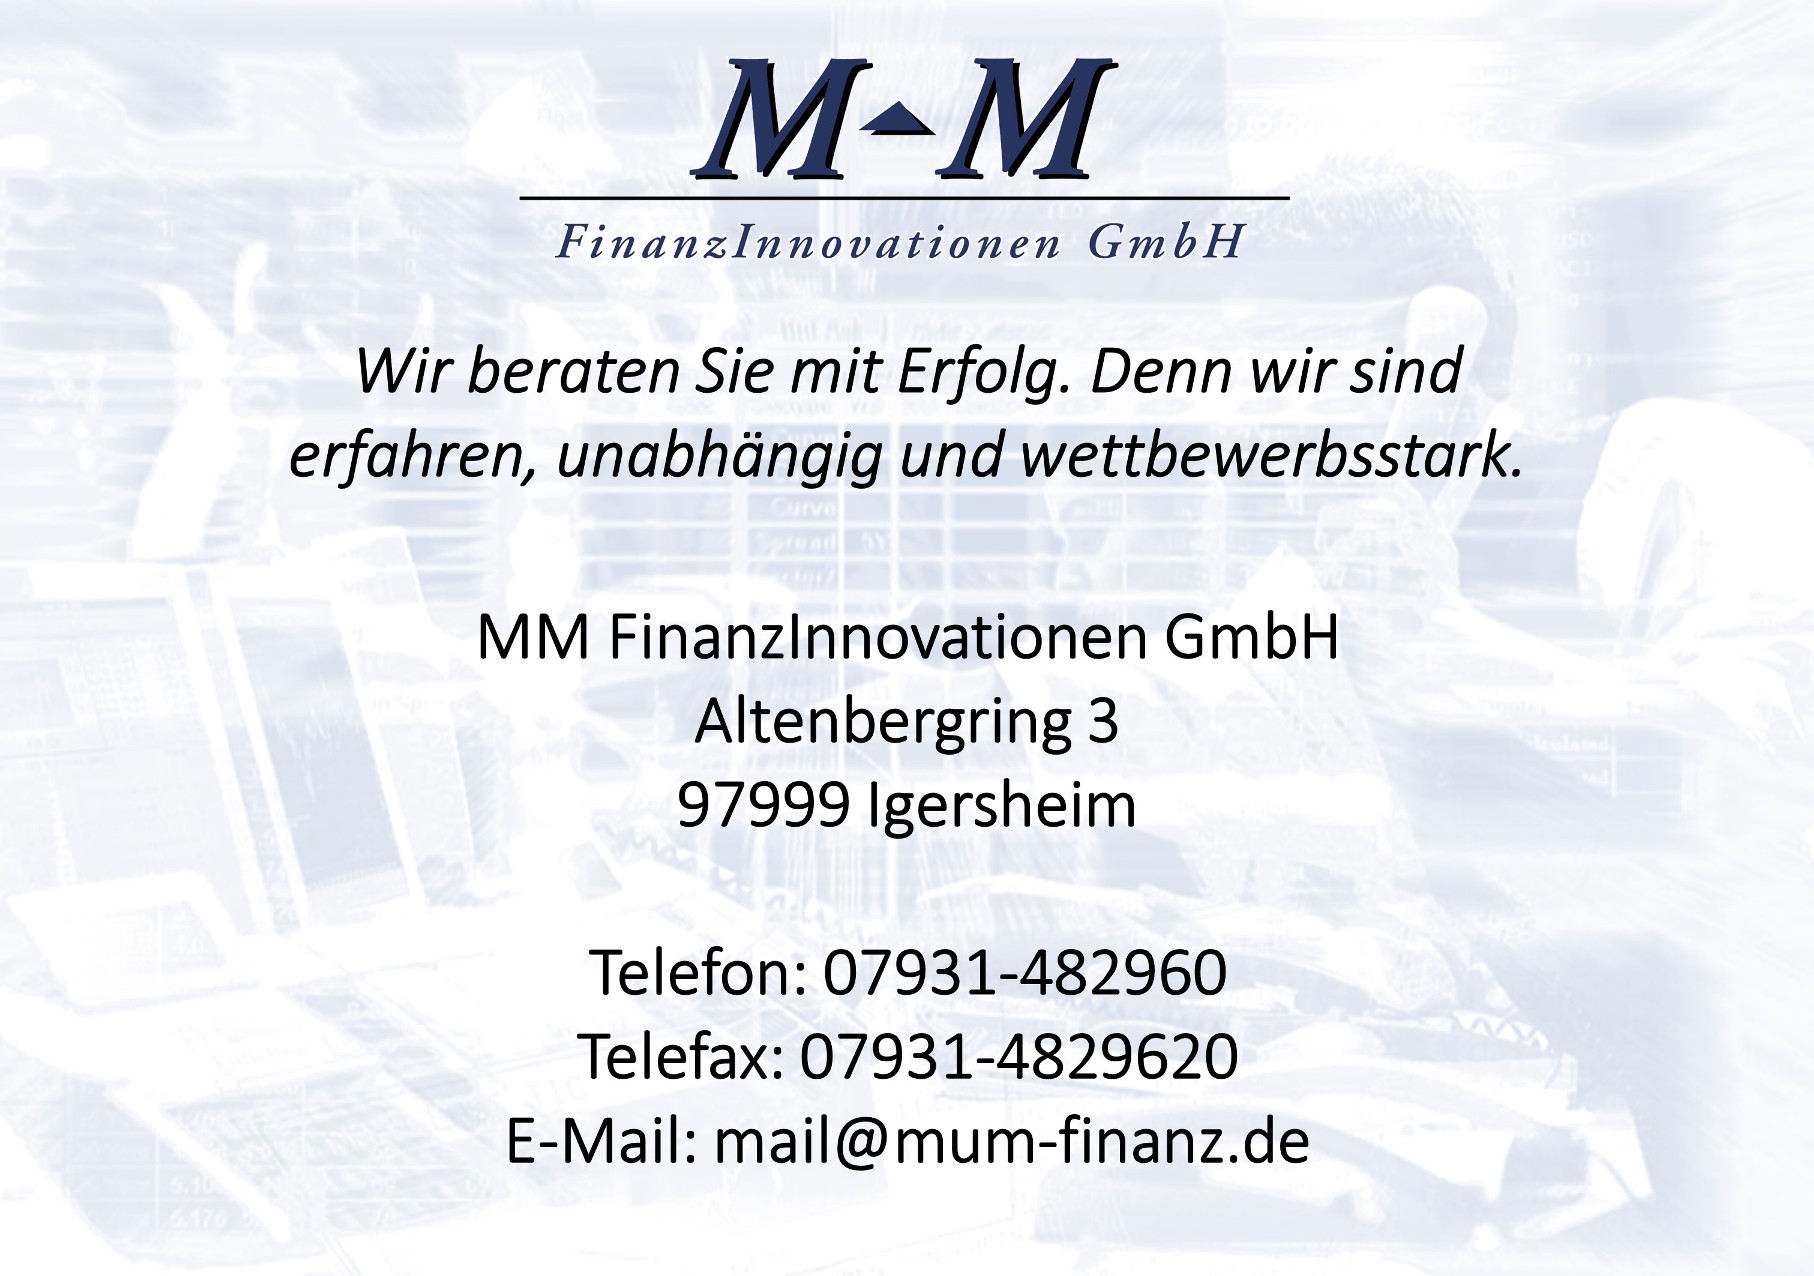 MM FinanzInnovationen GmbH